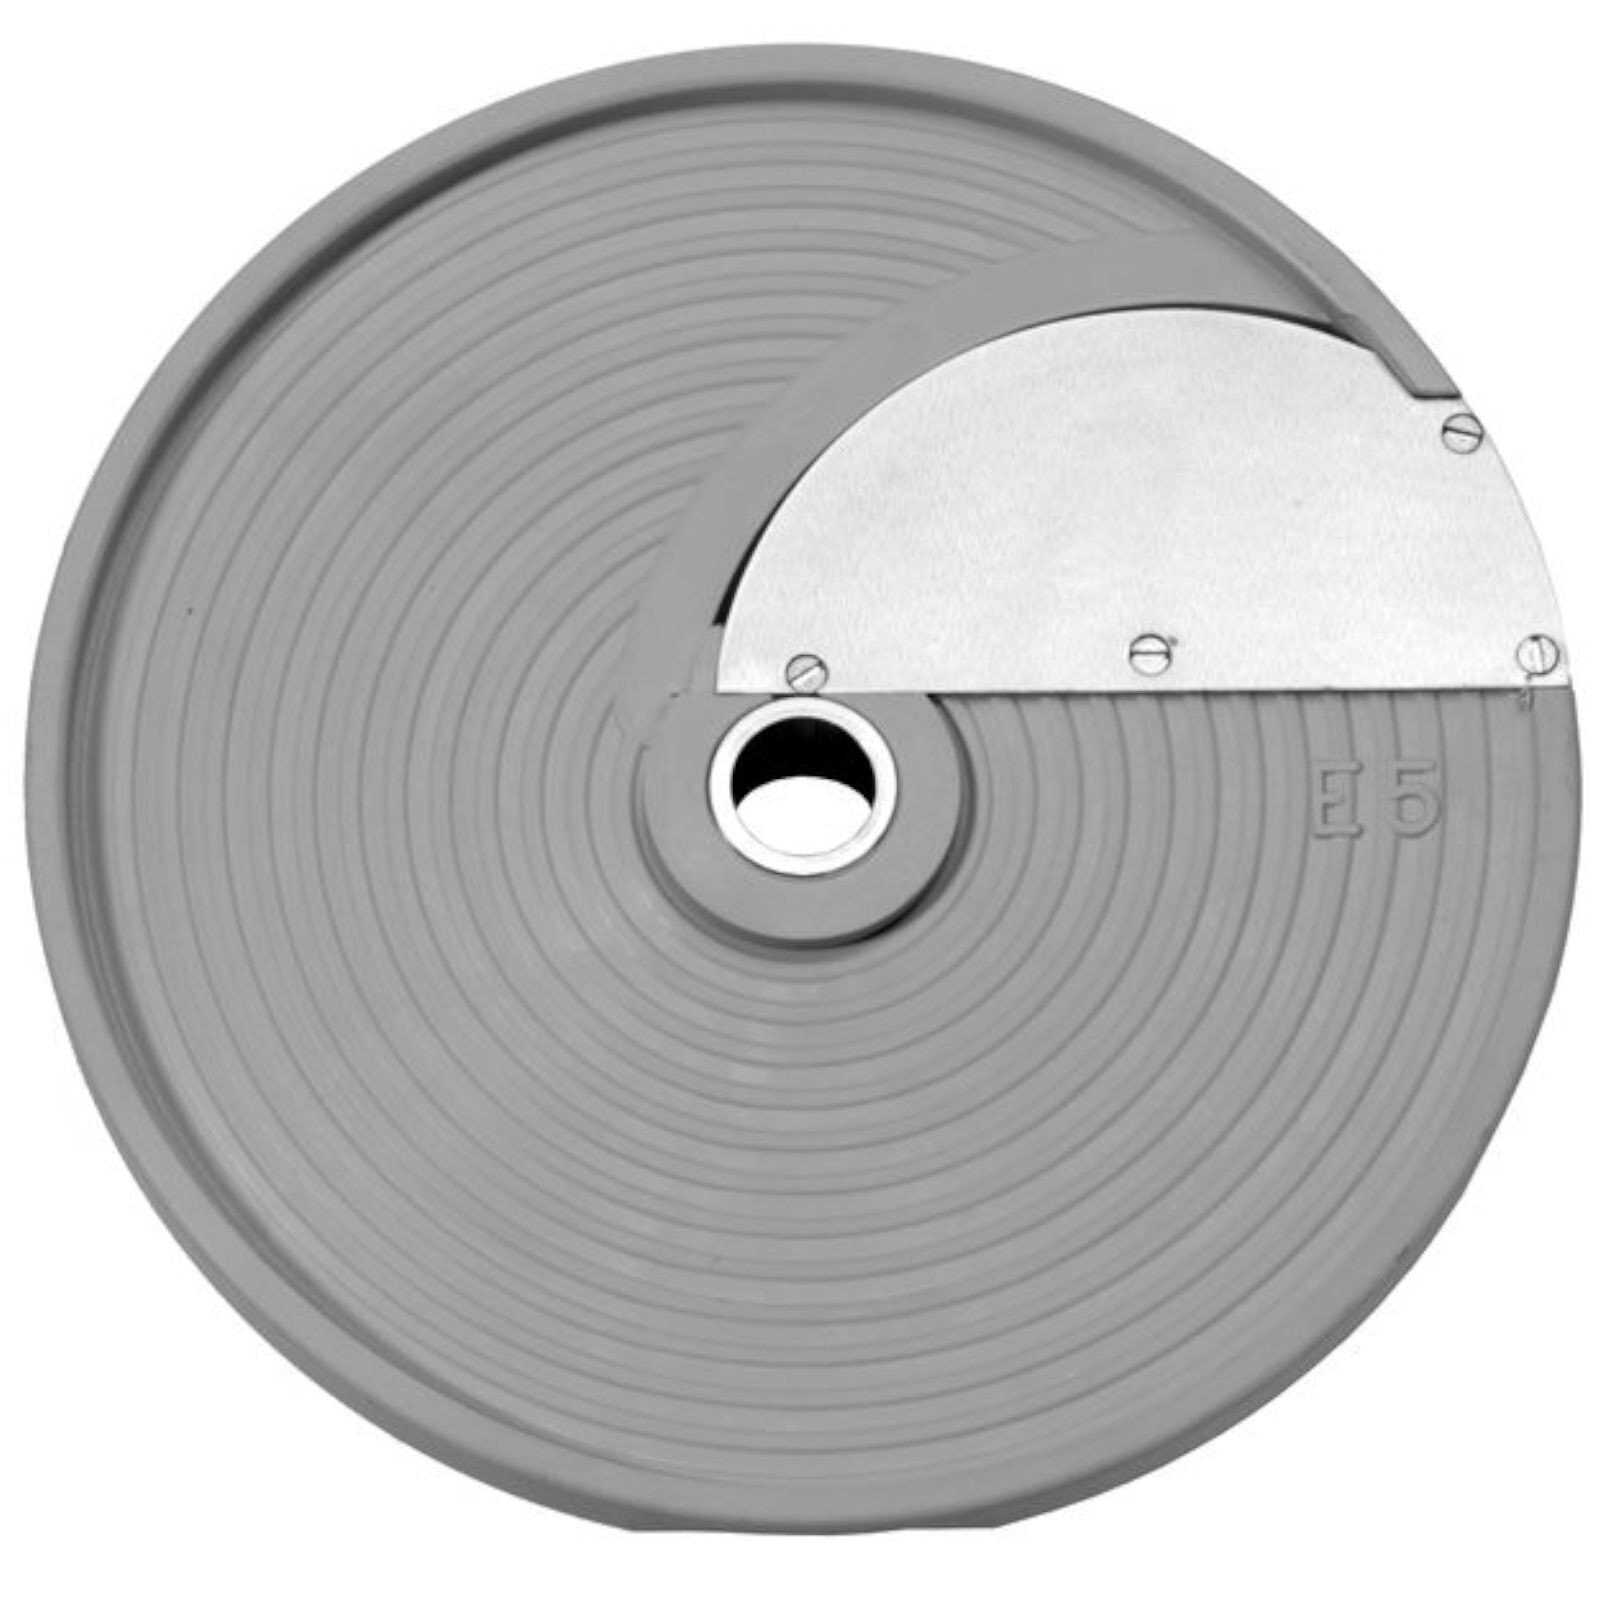 Disc for slicer TOP LINE 300 600 800 for 2mm slices Hendi 234044